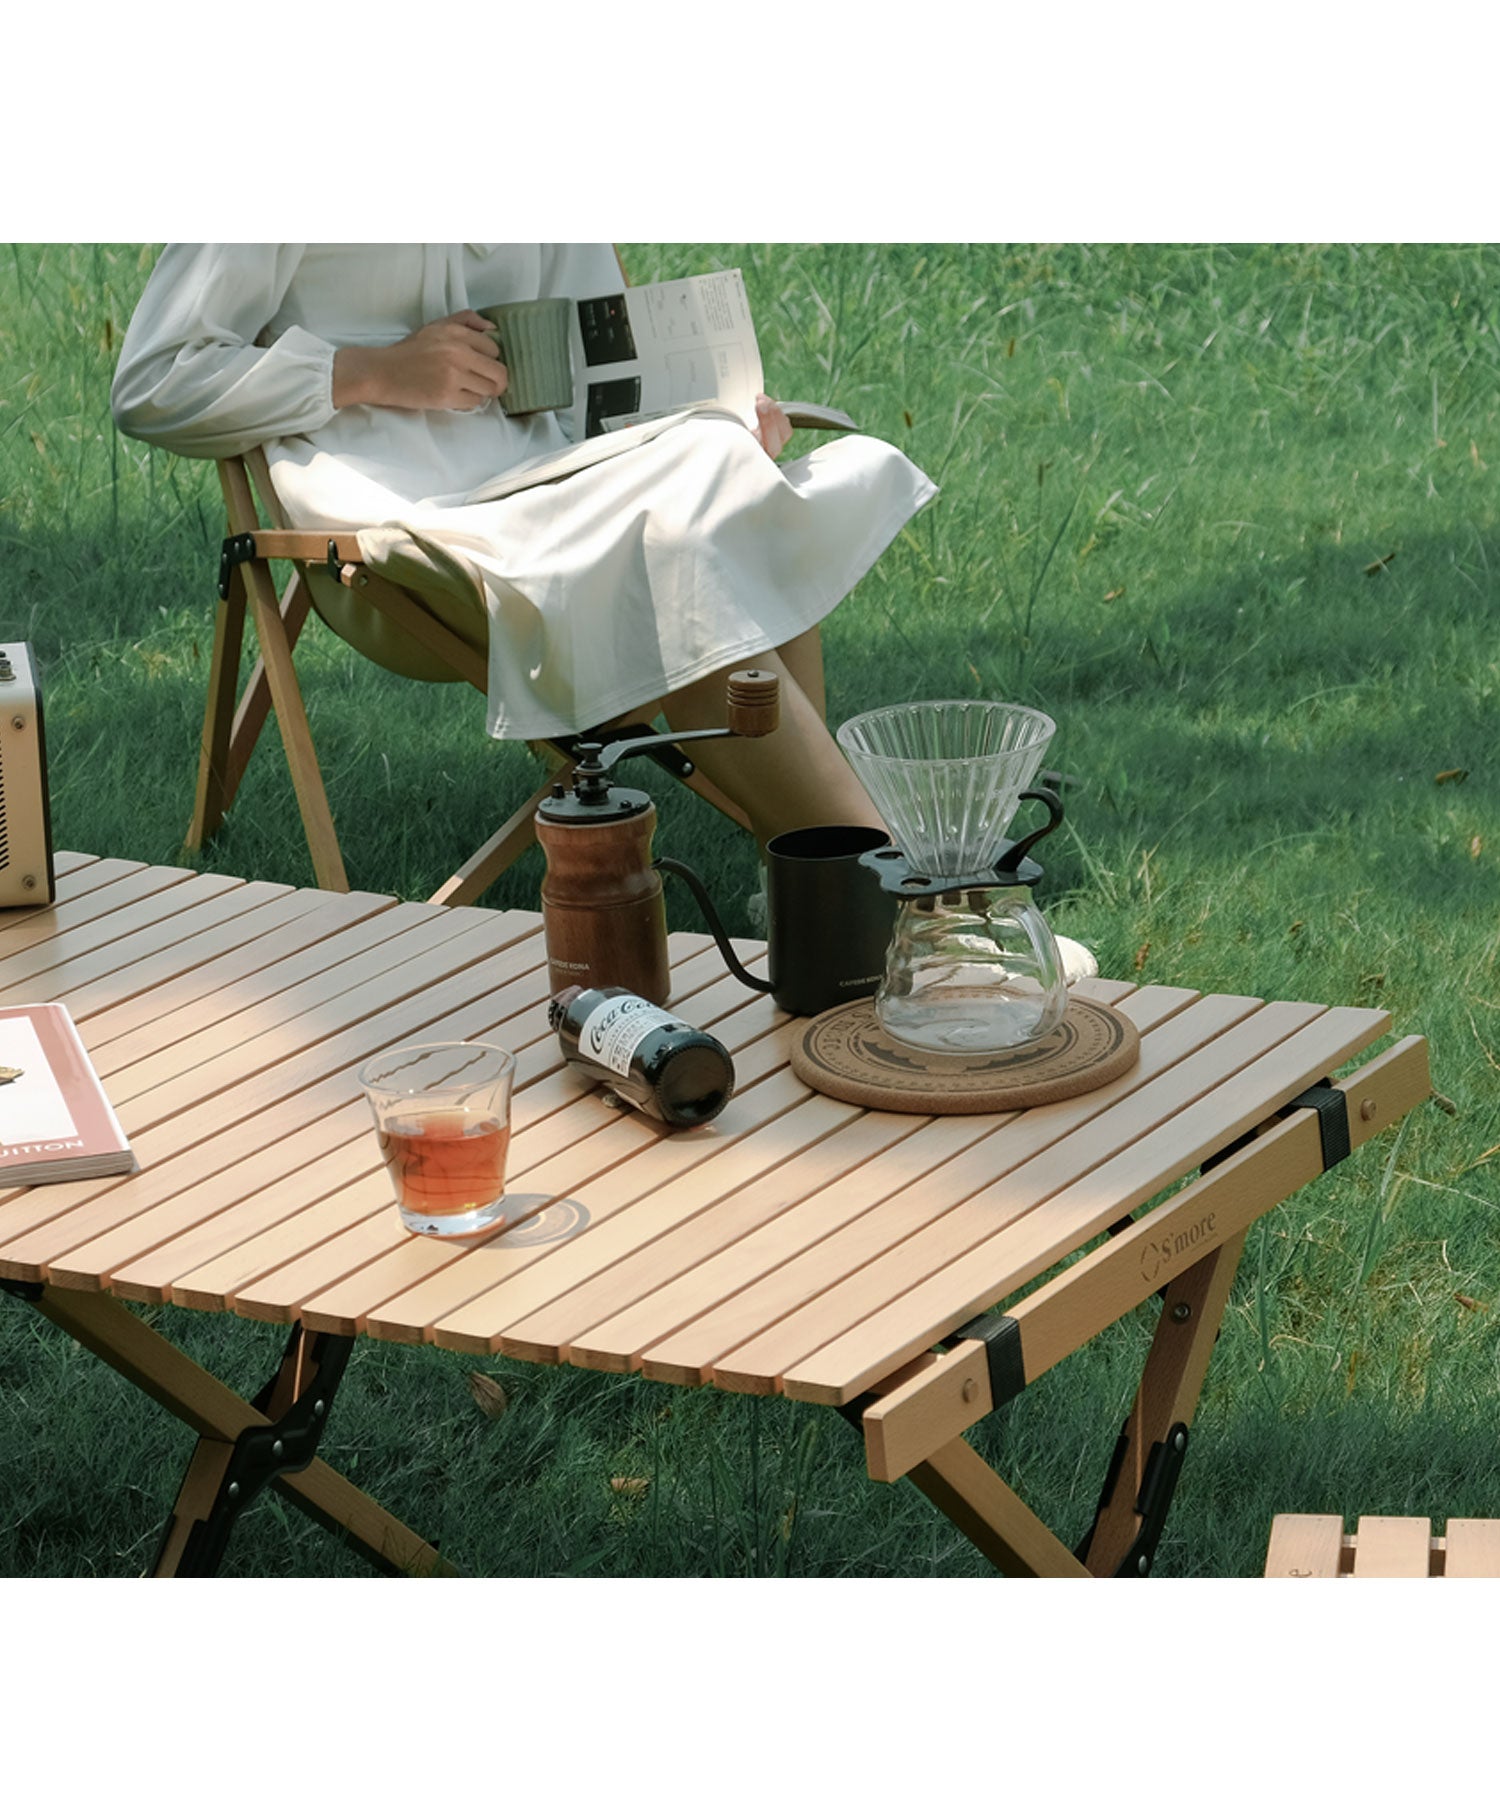 S'more(スモア) Woodi Roll Table キャンプ テーブル ウ